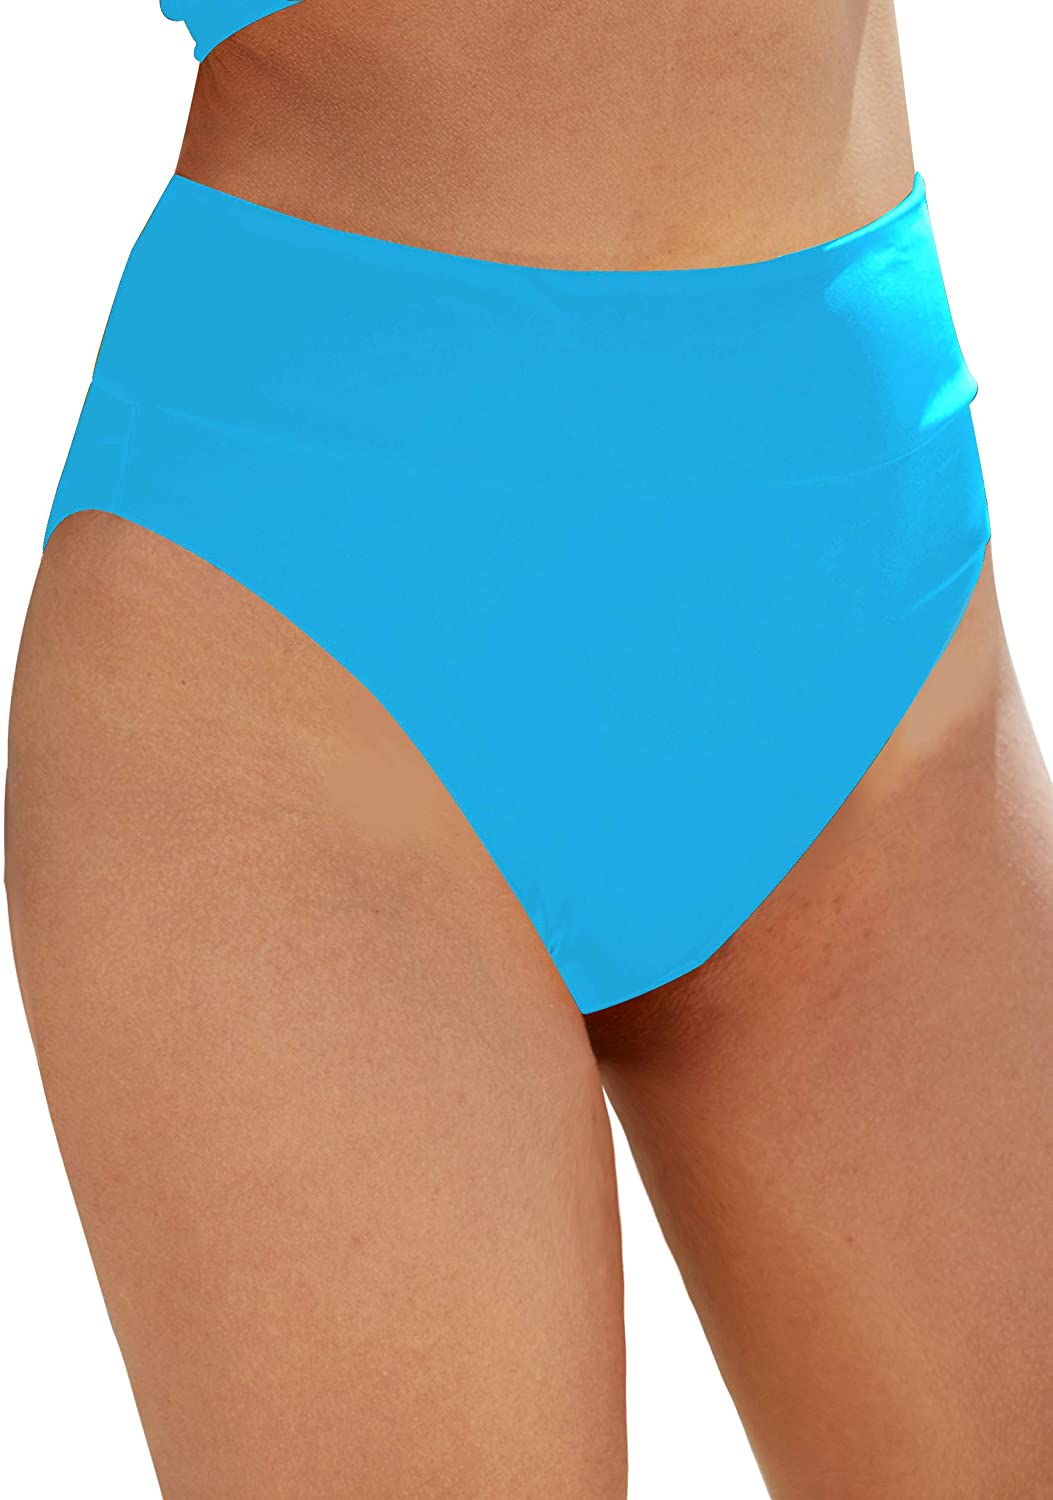 Upopby Women's Sexy High-waist Bikini bottom details